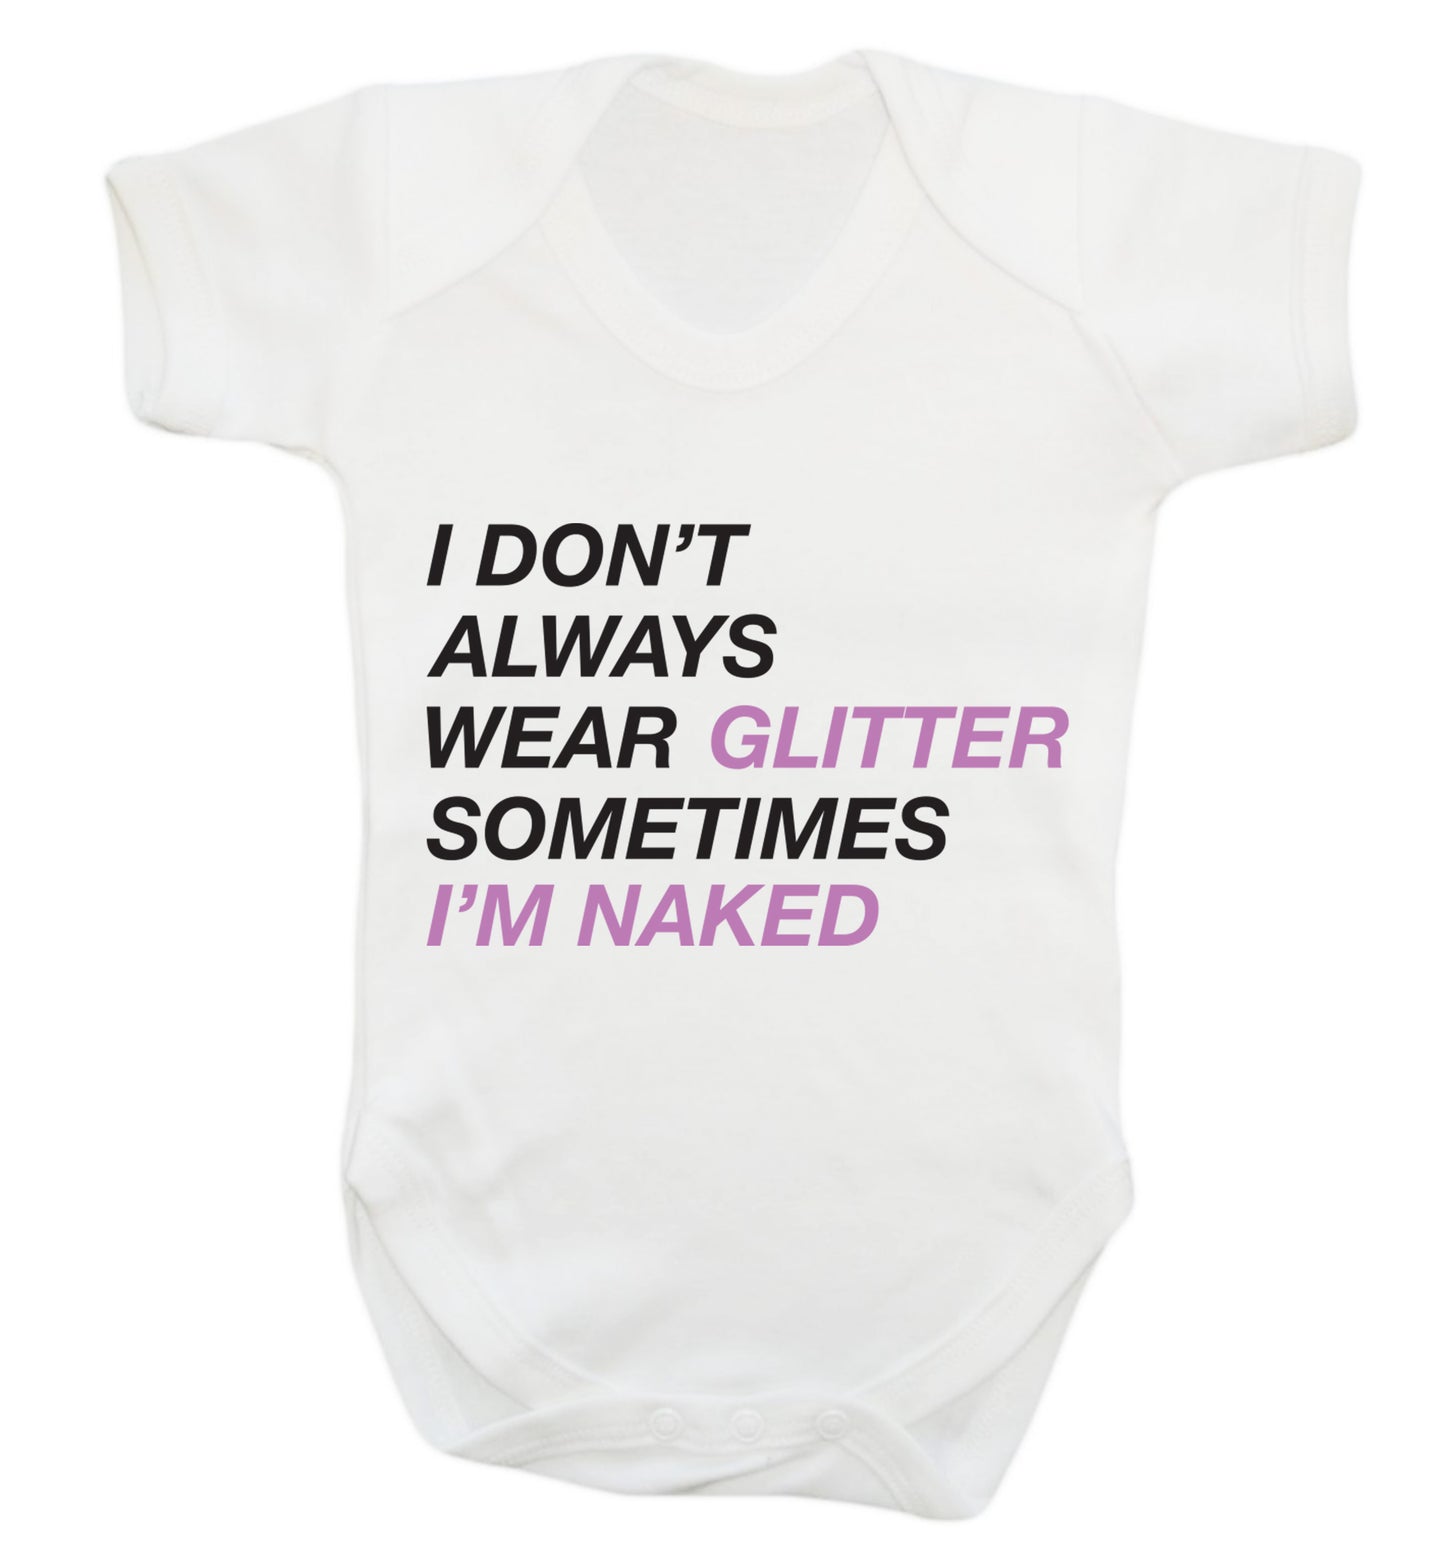 I don't always wear glitter sometimes I'm naked! Baby Vest white 18-24 months